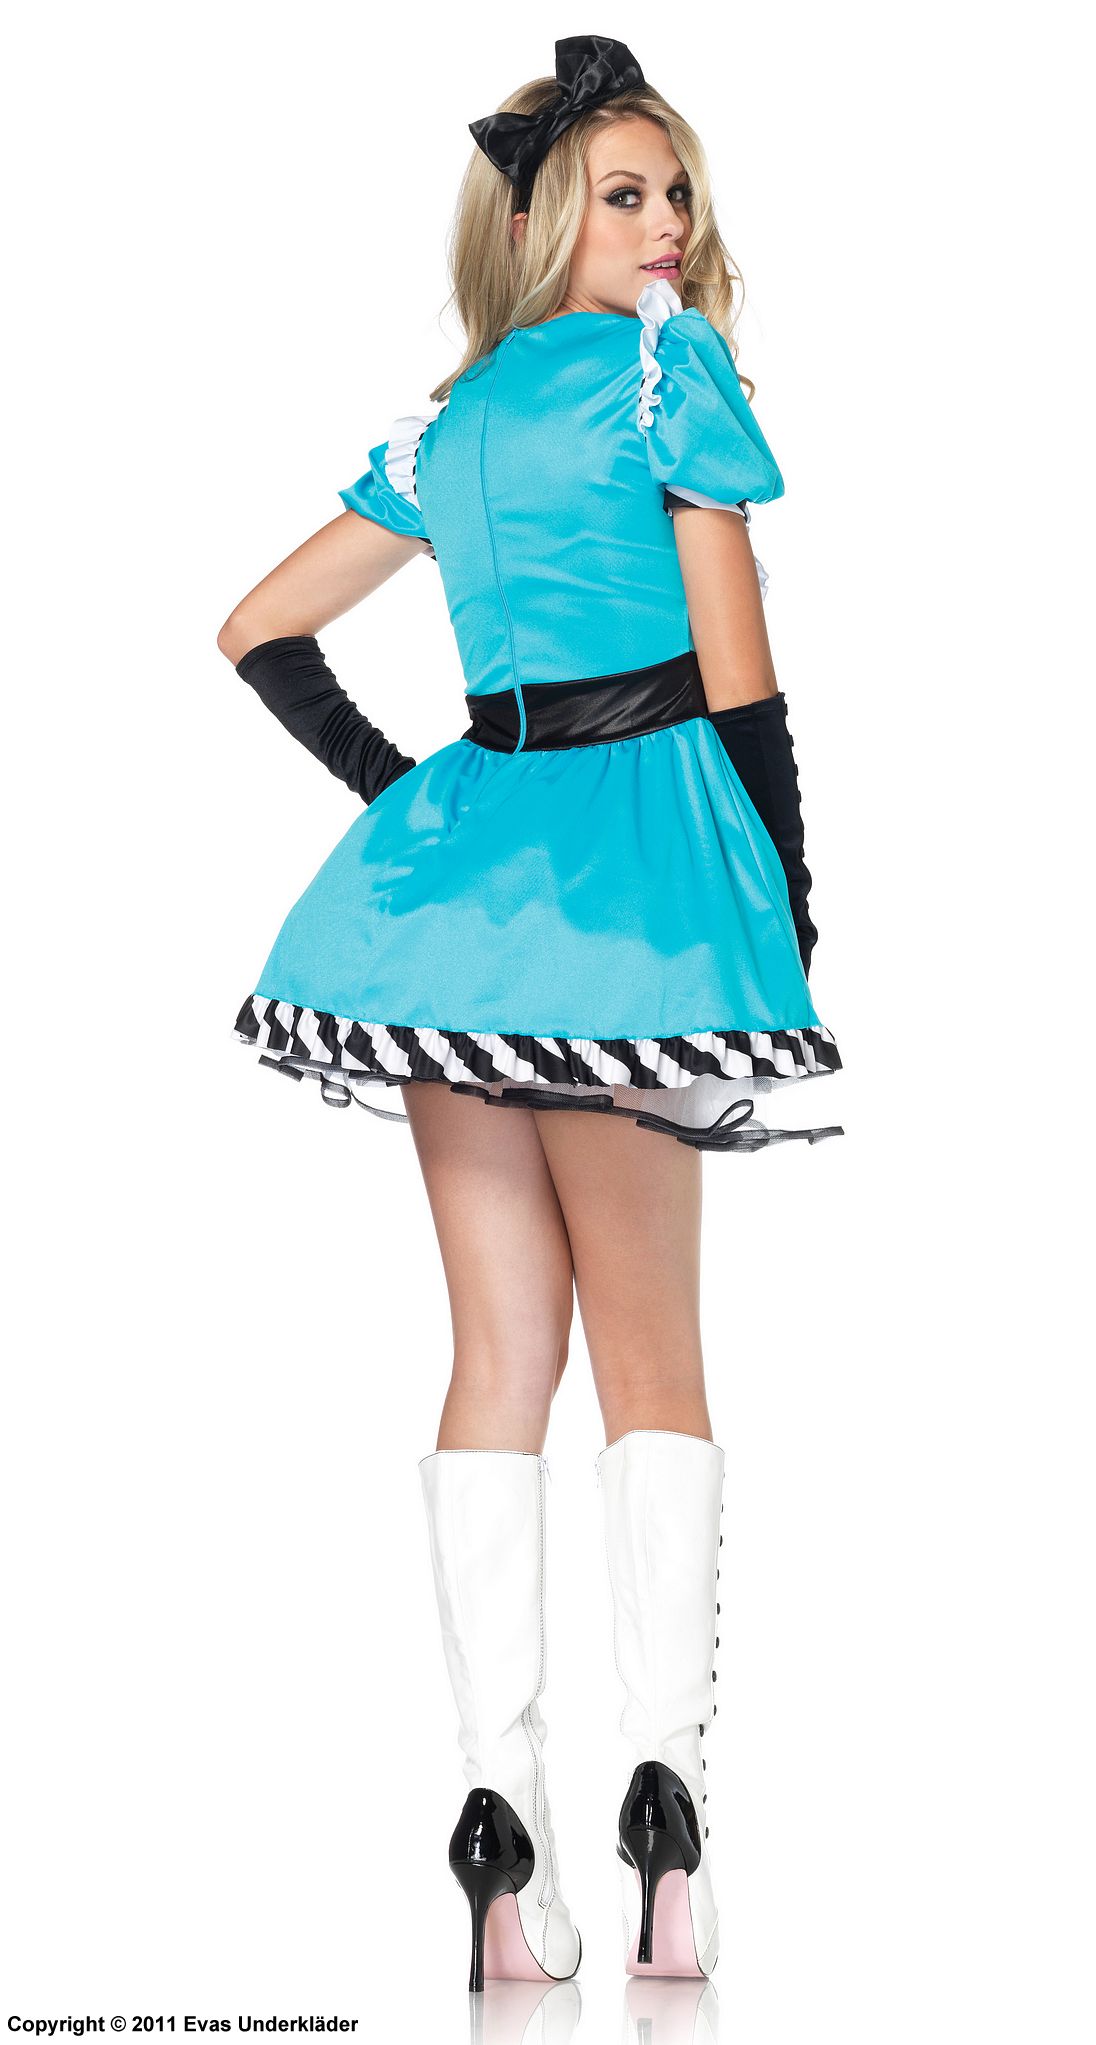 Alice in Wonderland, costume dress, ruffles, big bow, stripes